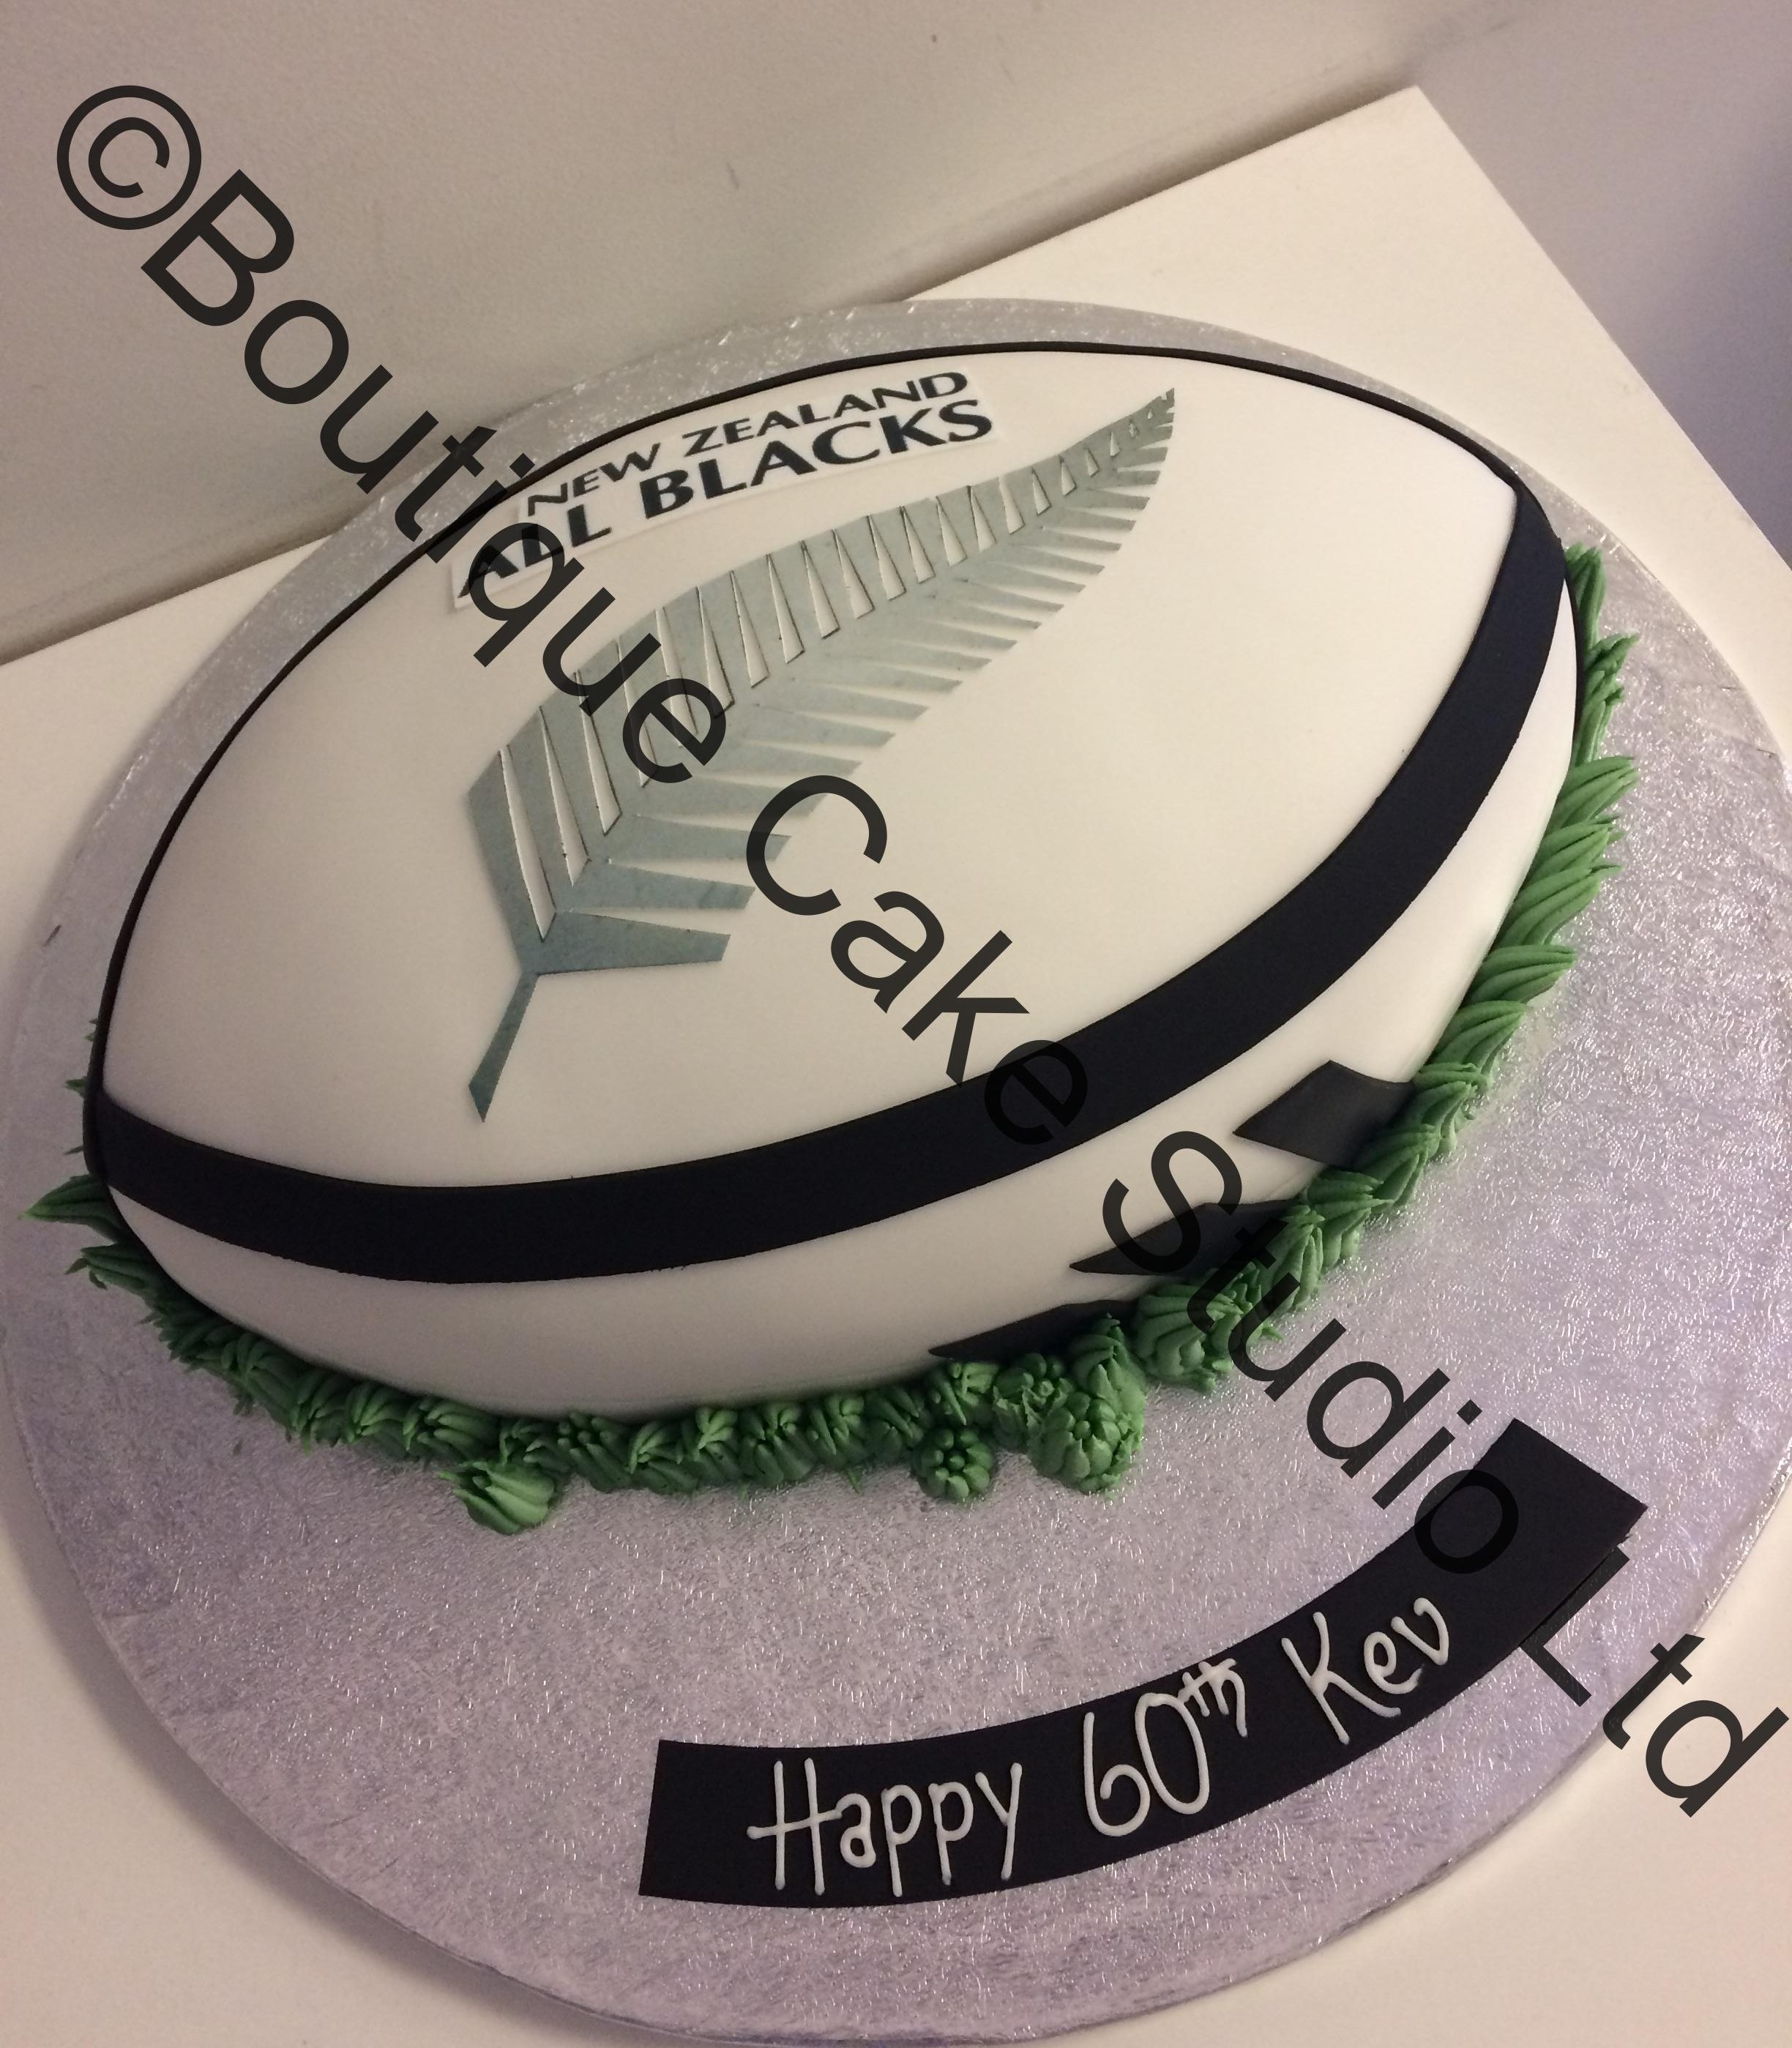 All Blacks Rugby Ball Cake